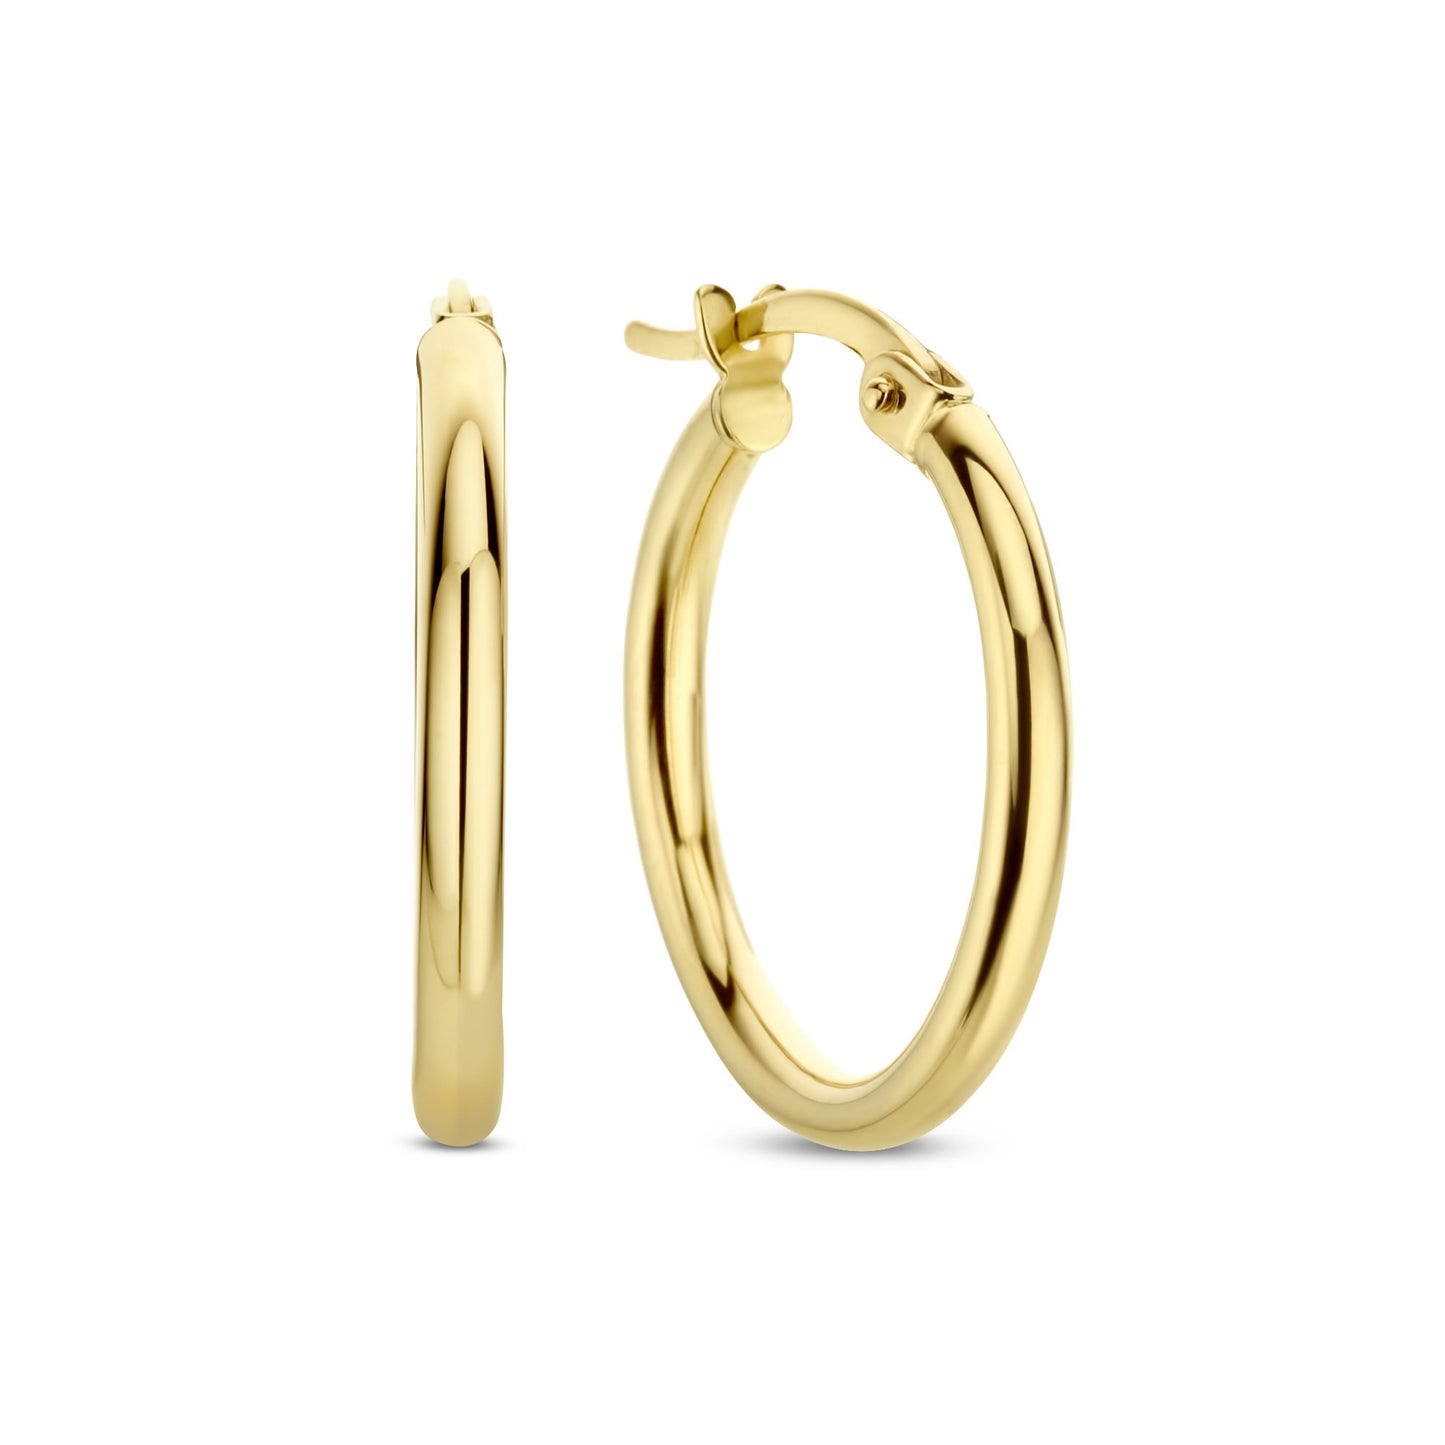 Regalo d'Amore 9 karat gold earring set